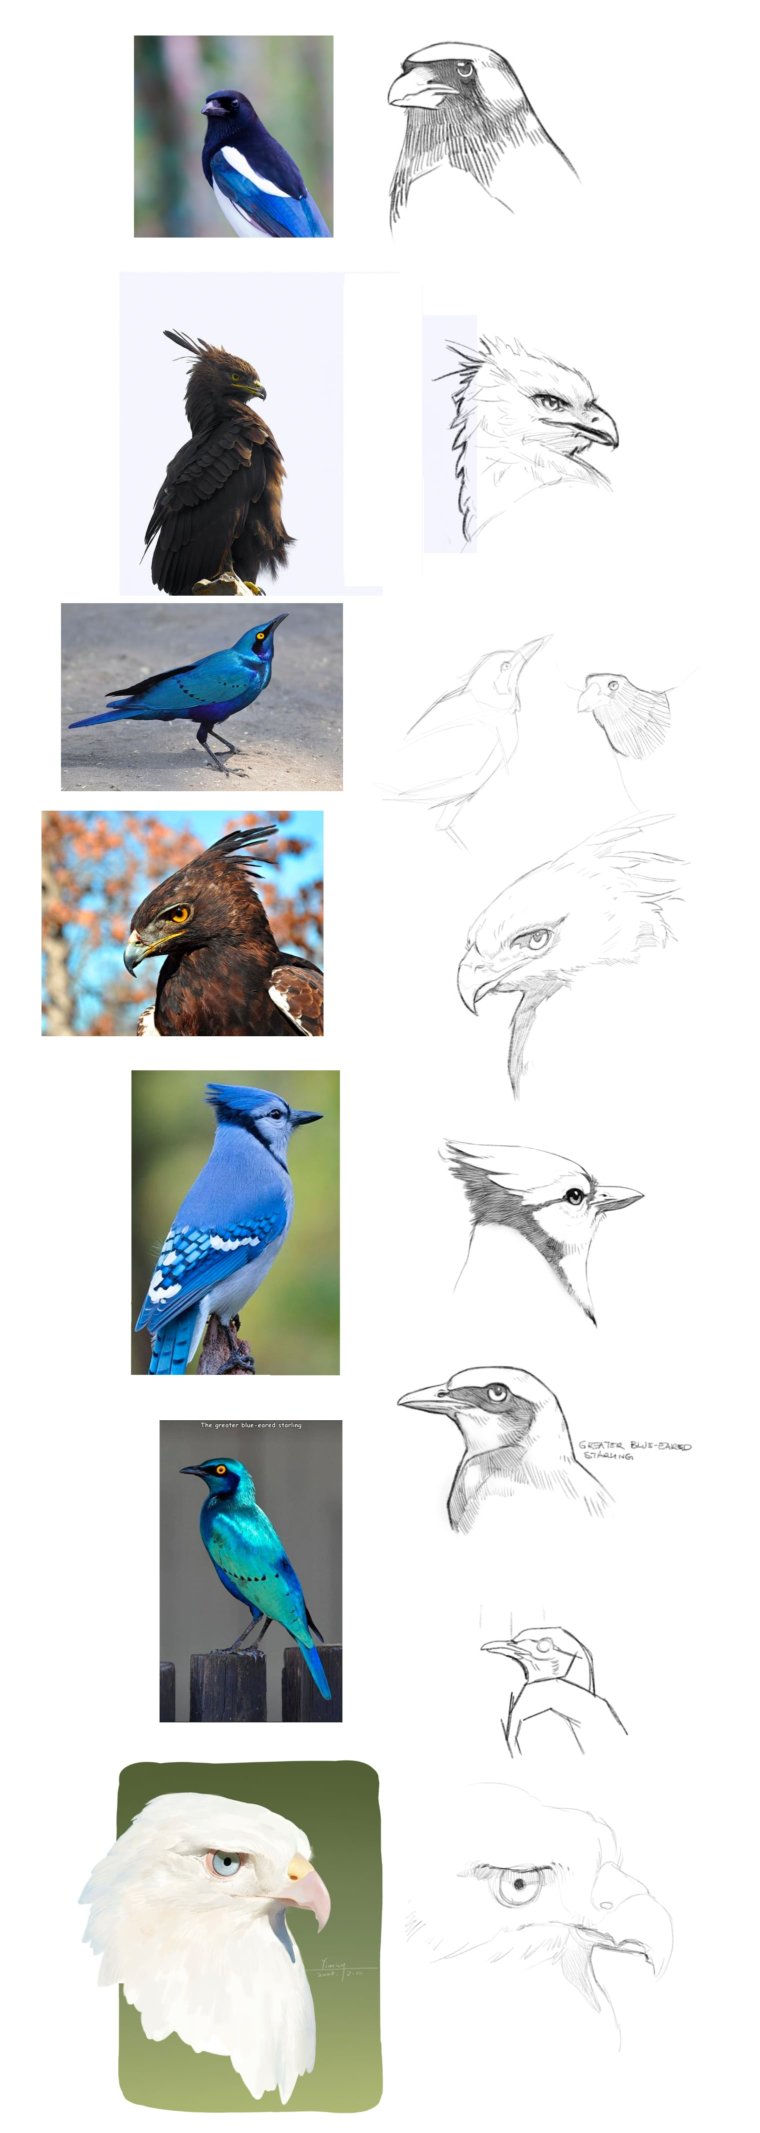 Múltiples bocetos de pájaros - Cómo dibujar aves en Photoshop